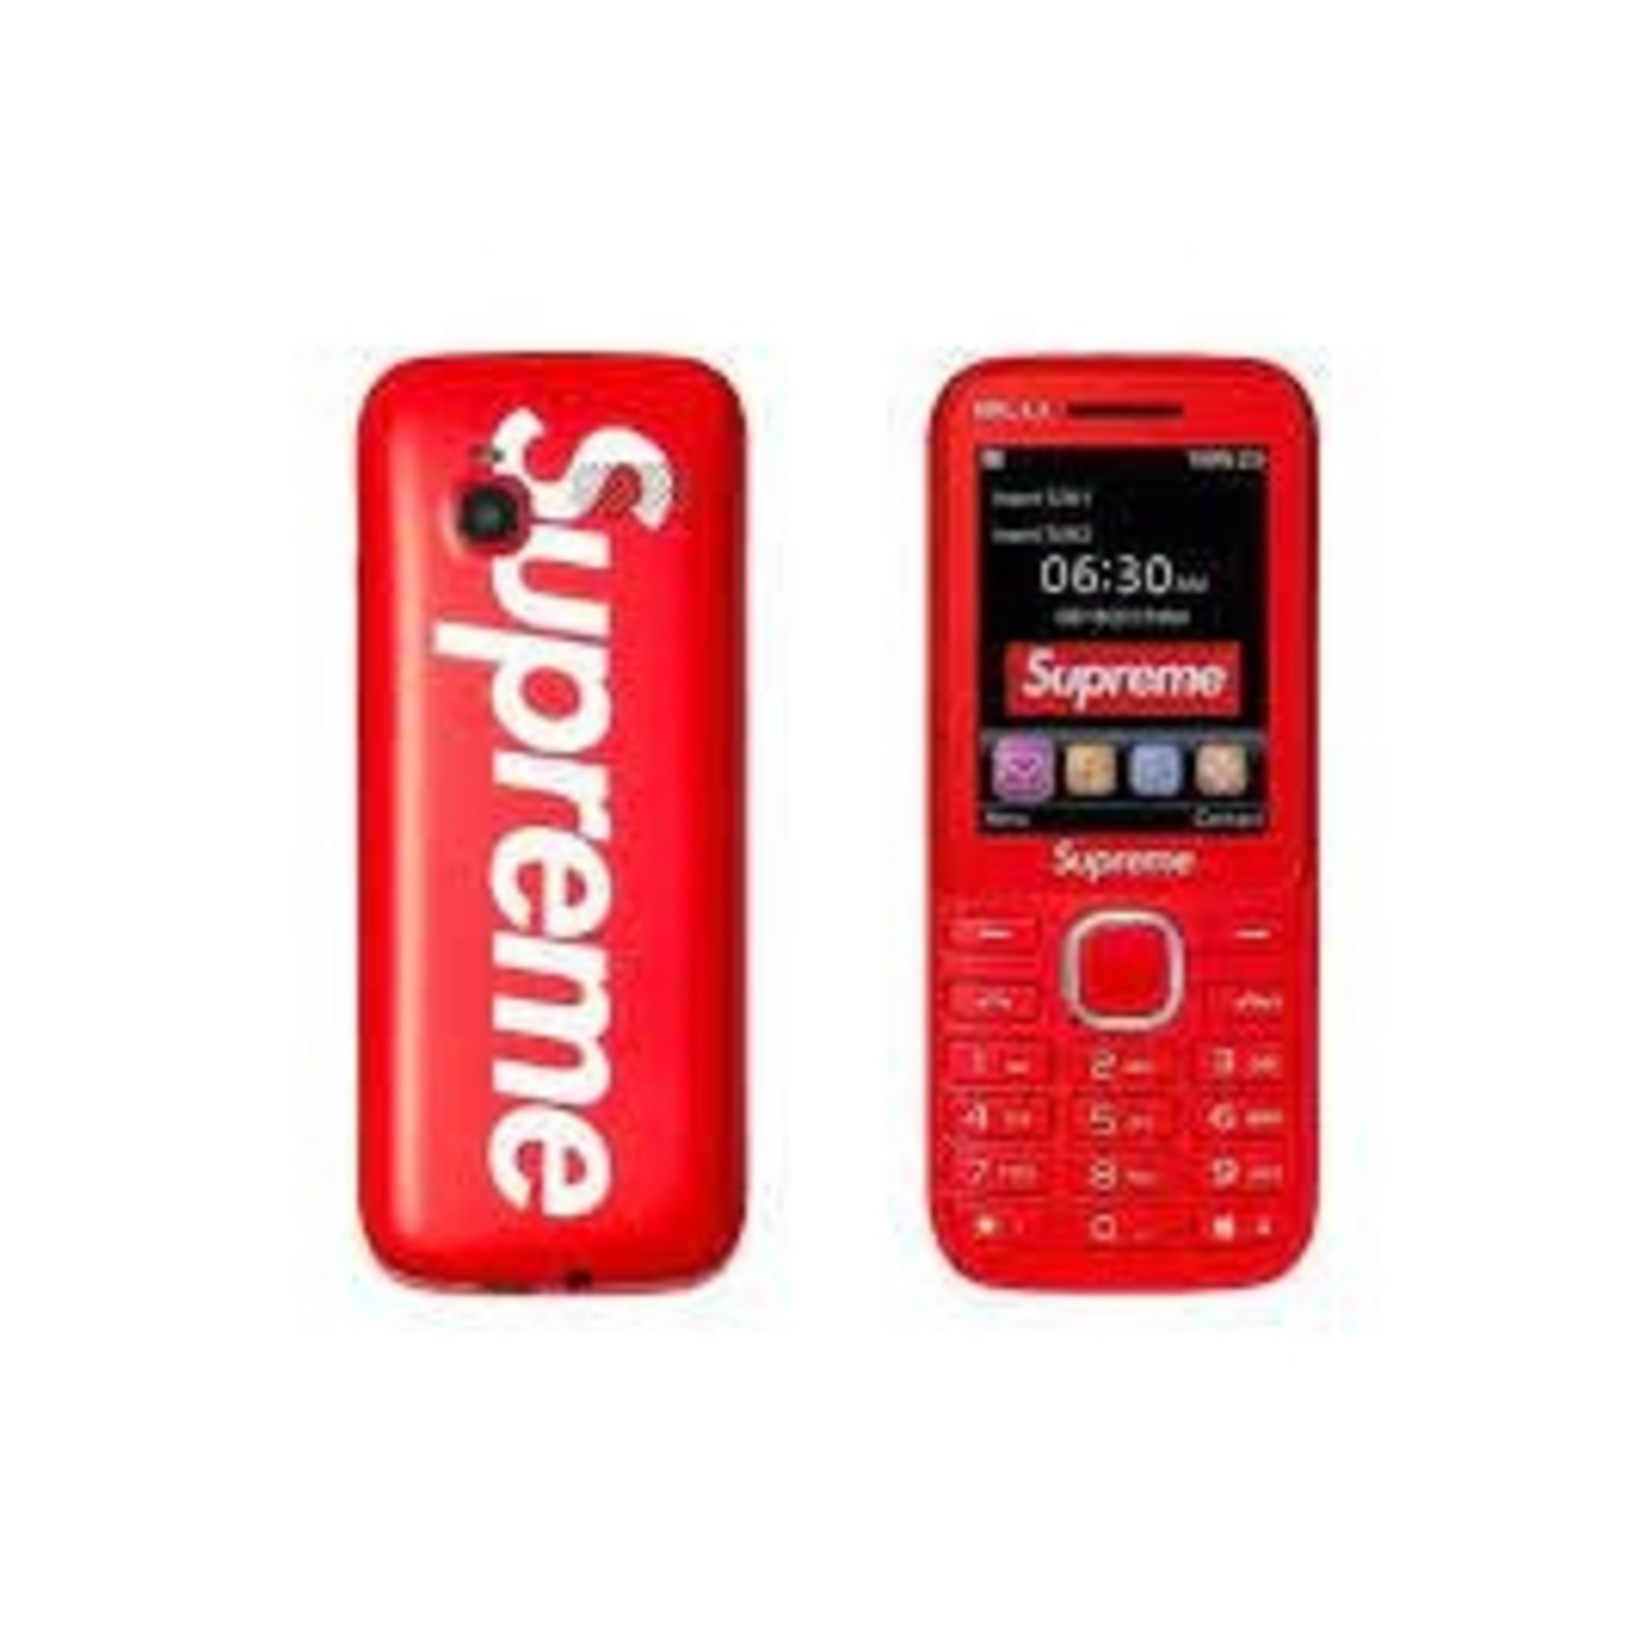 Supreme Supreme Blu Burner phone red Size OS, DS BRAND NEW